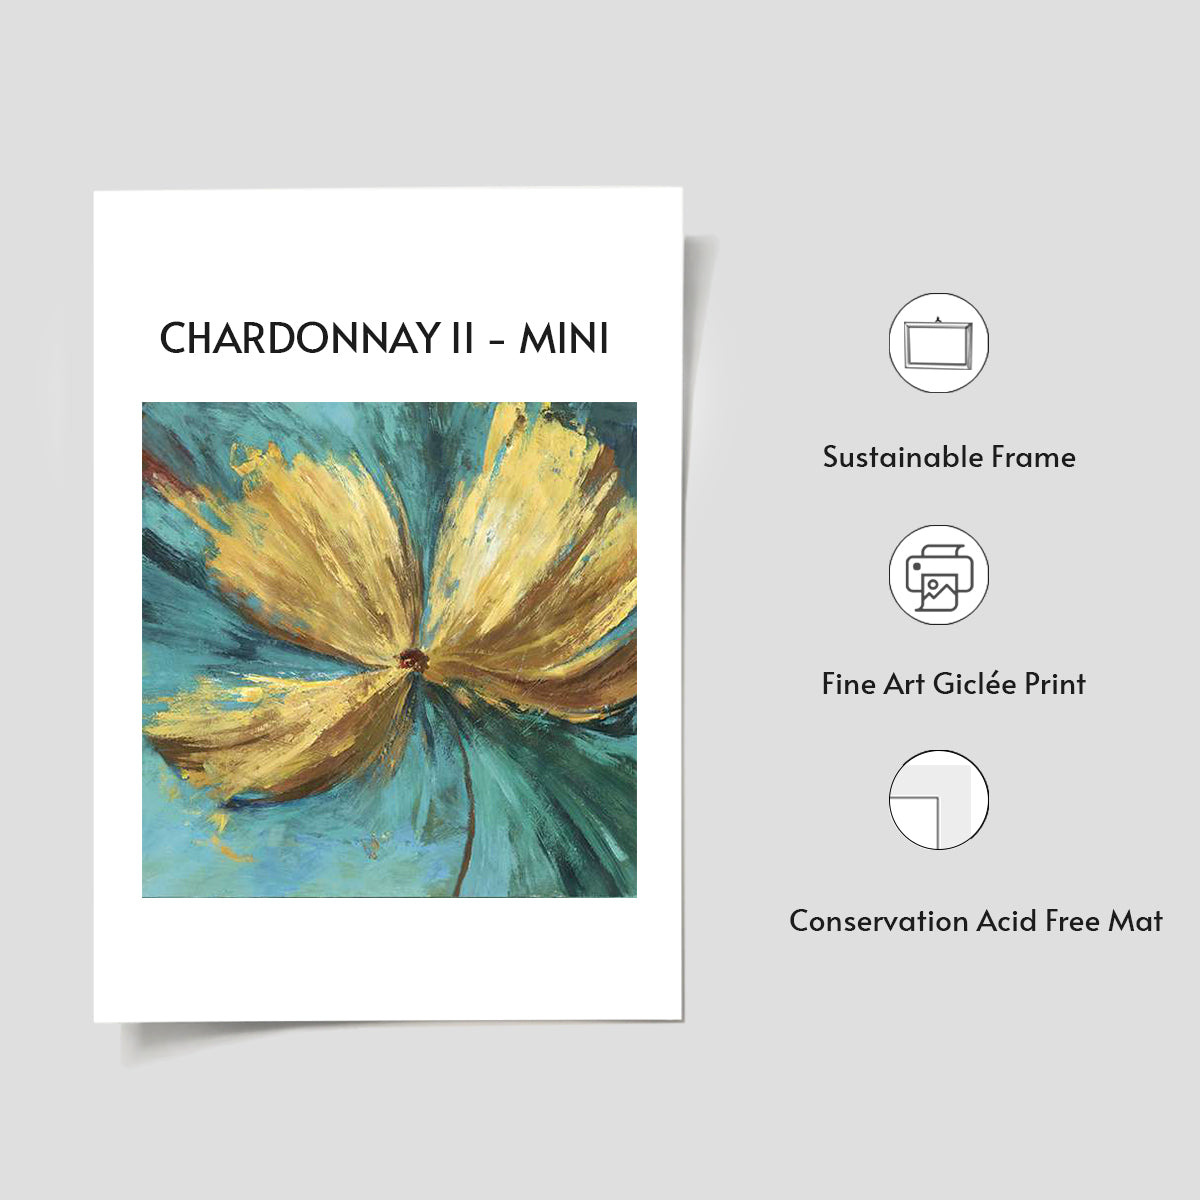 Chardonnay II – Mini